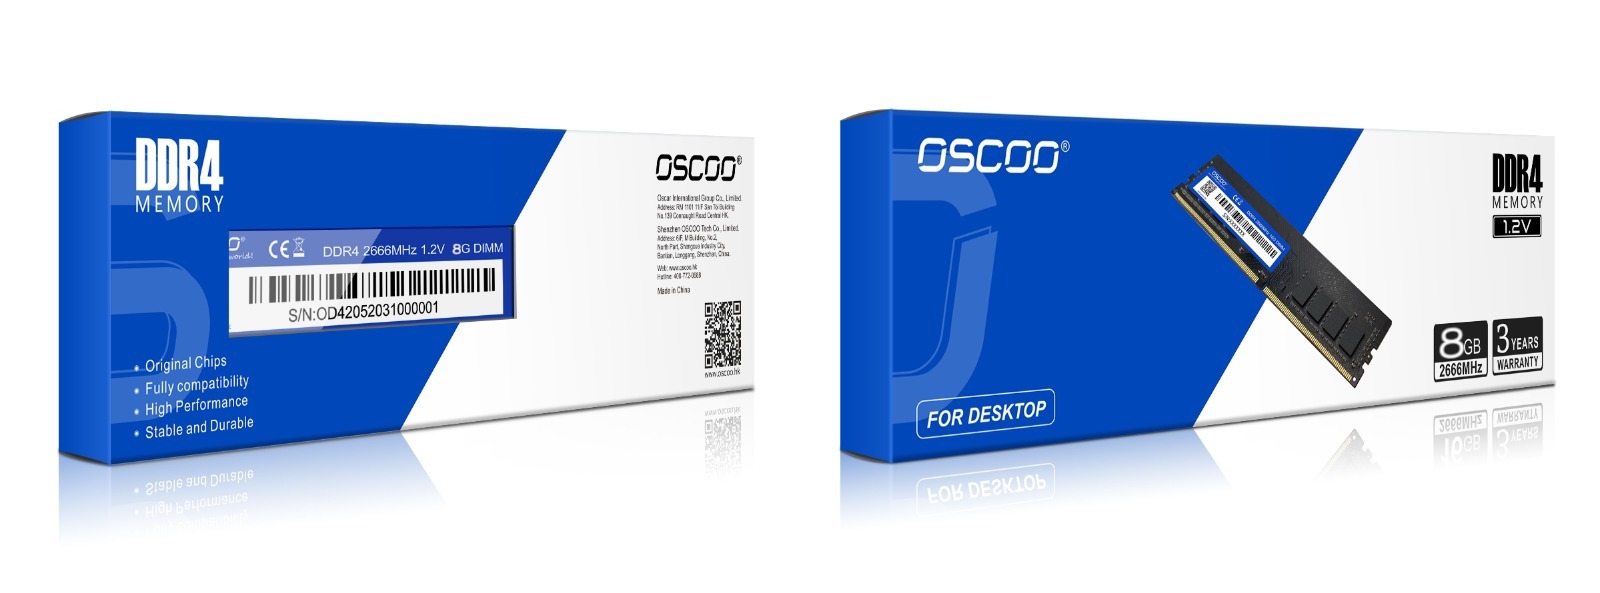 Oscoo DDR4 desktop 8GB 3200MHz Heatsink